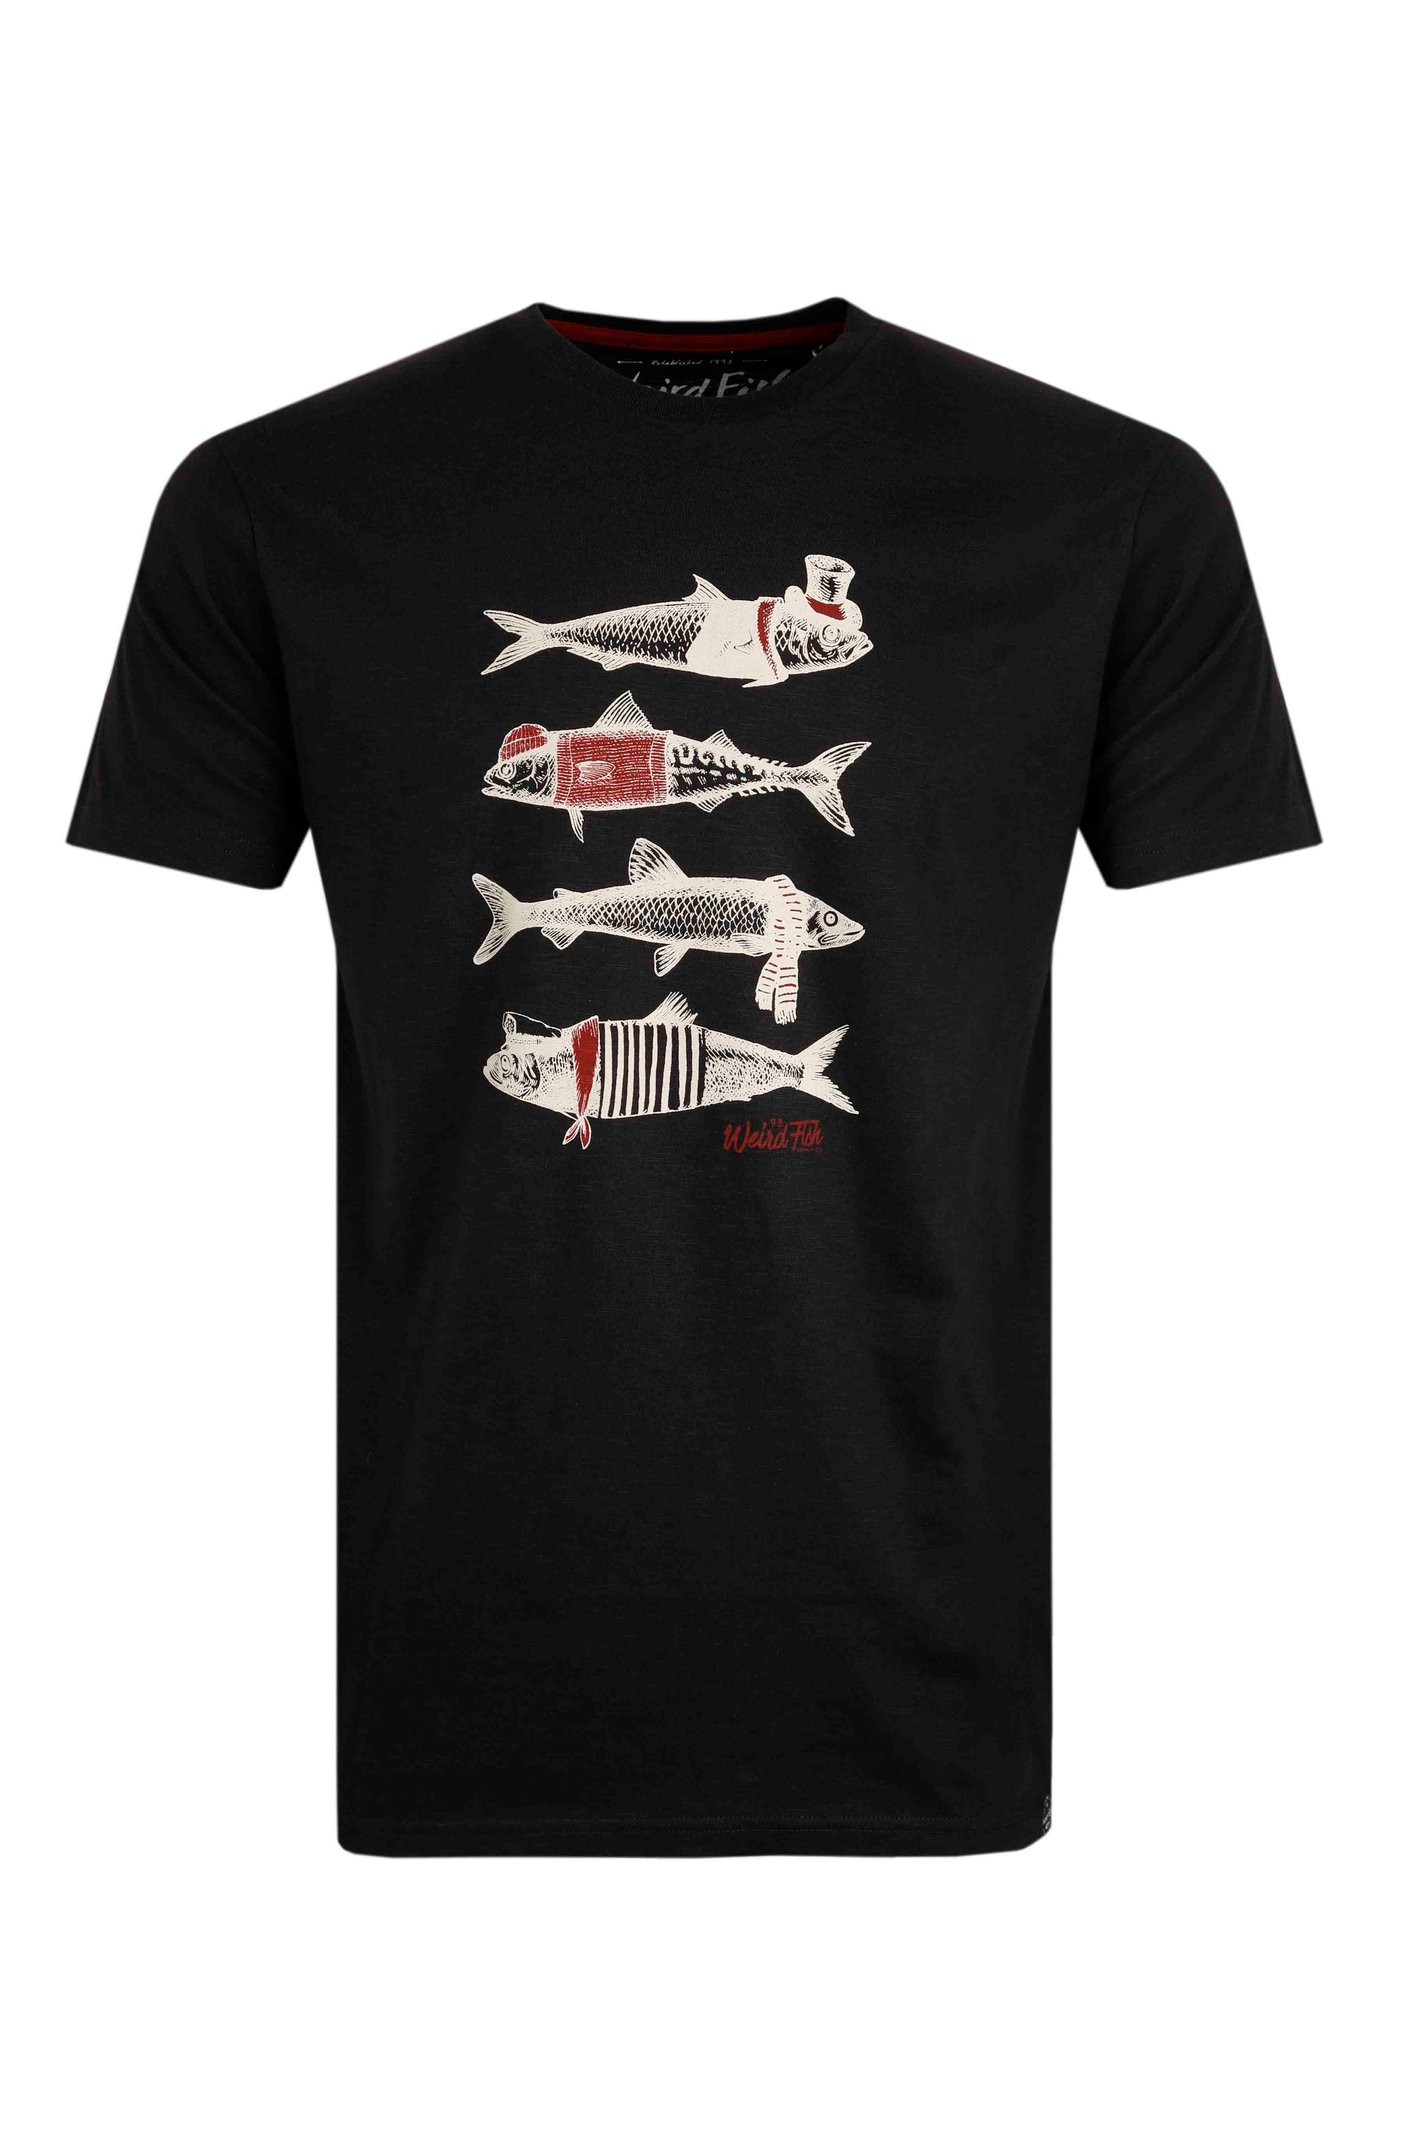 weird fish wrap up graphic t-shirt midnight size l